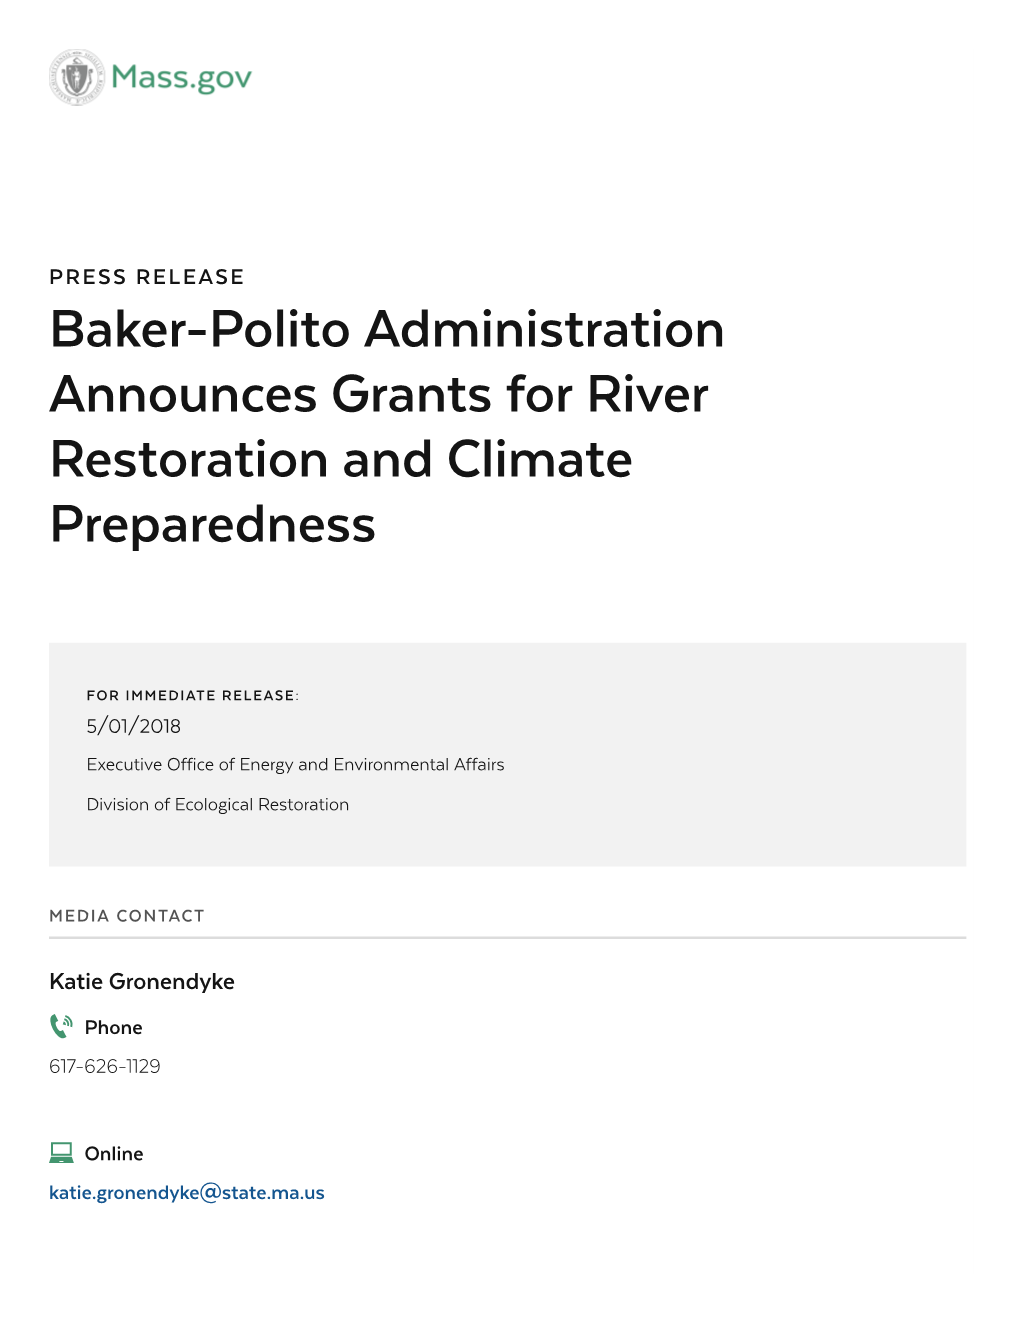 Baker-Polito Administration Announces Grants for River Restoration and Climate Preparedness